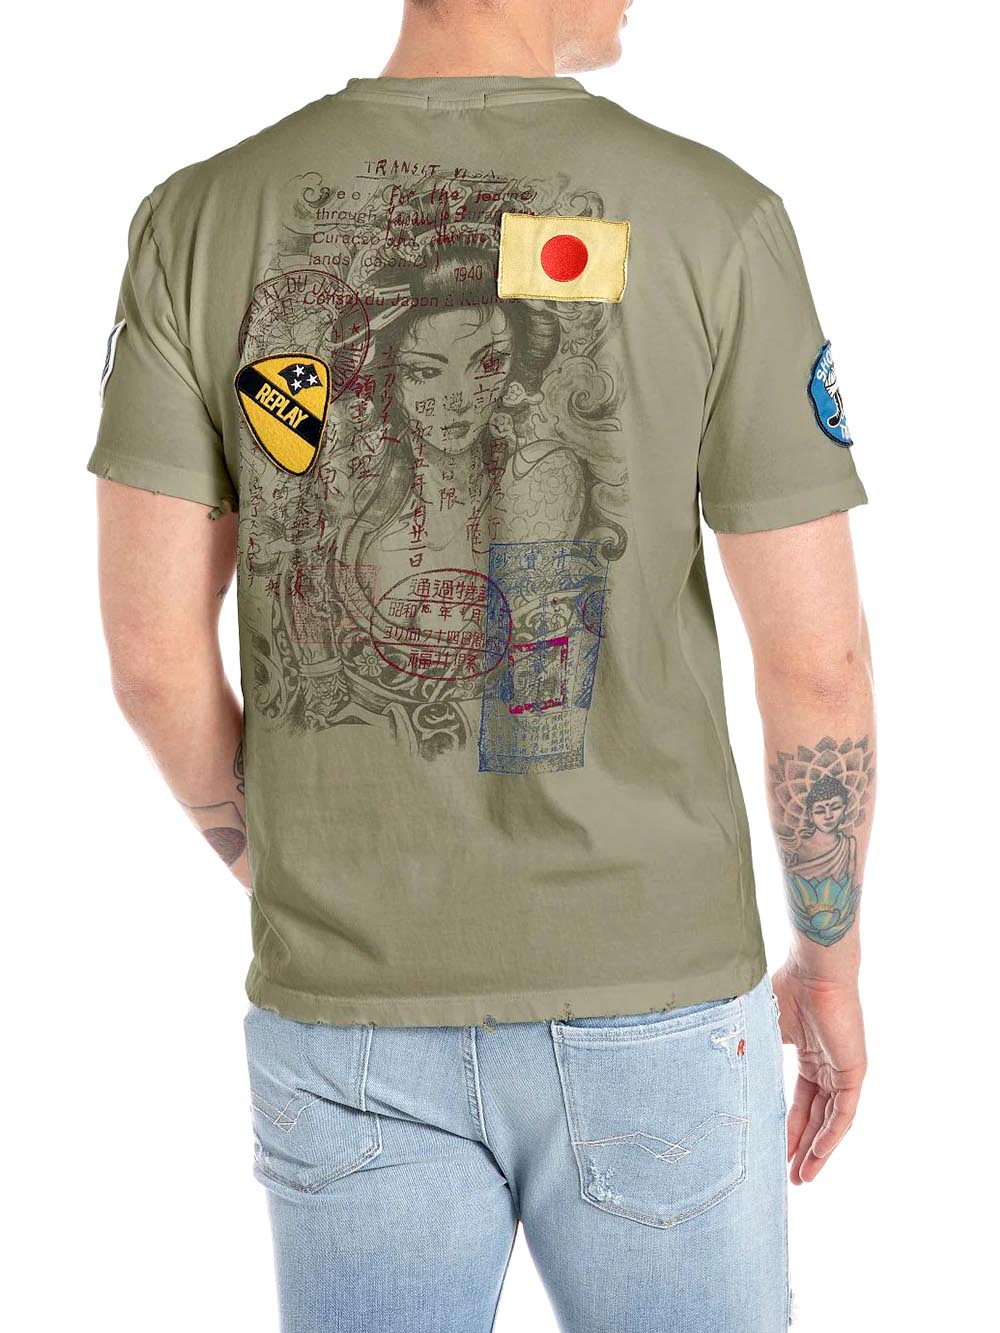 Replay T-shirt Uomo M6763 .000.23608p Verde militare